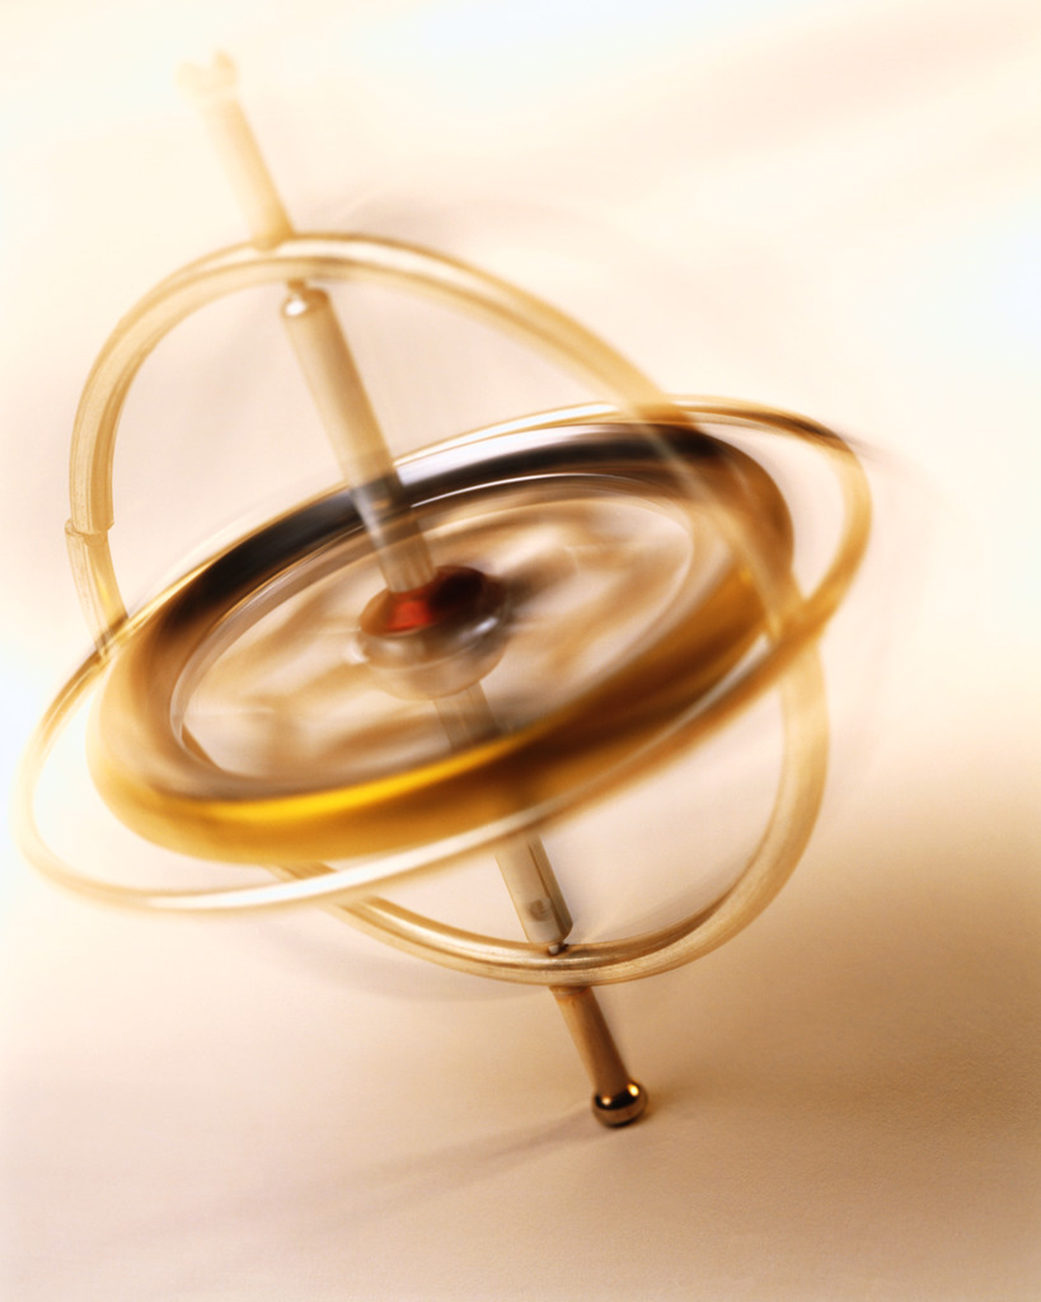 a spinning gyroscope